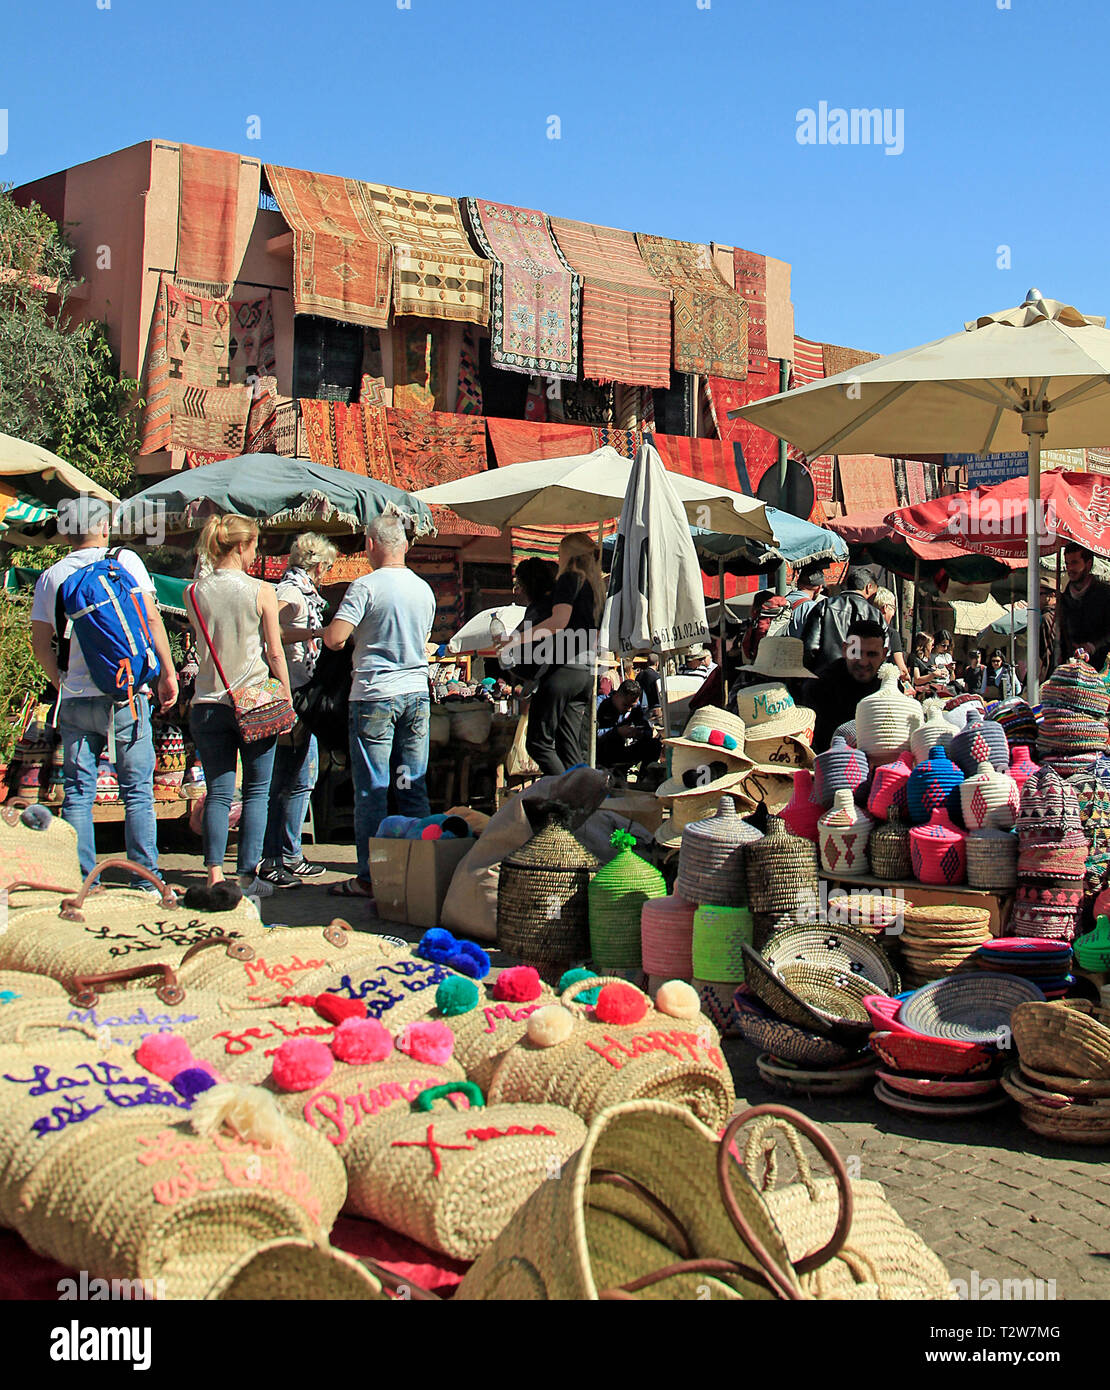 The Souk, Marrakech Stock Photo